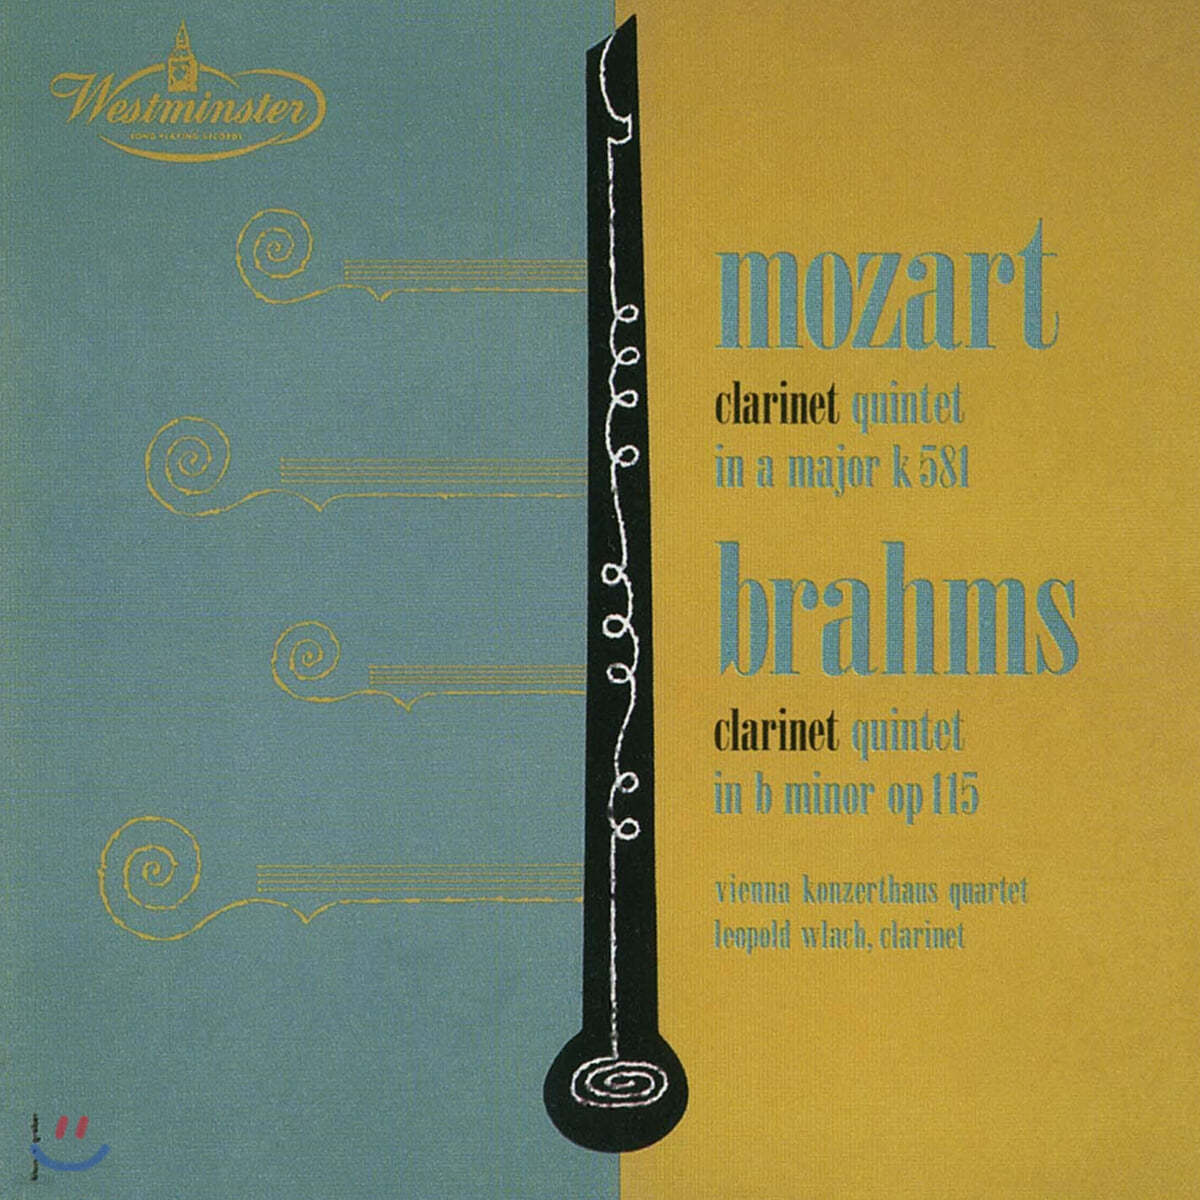 Leopold Wlach 모차르트 / 브람스: 클라리넷 5중주 (Mozart: Clarinet Quintet K.581 / Brahms: Op.115)